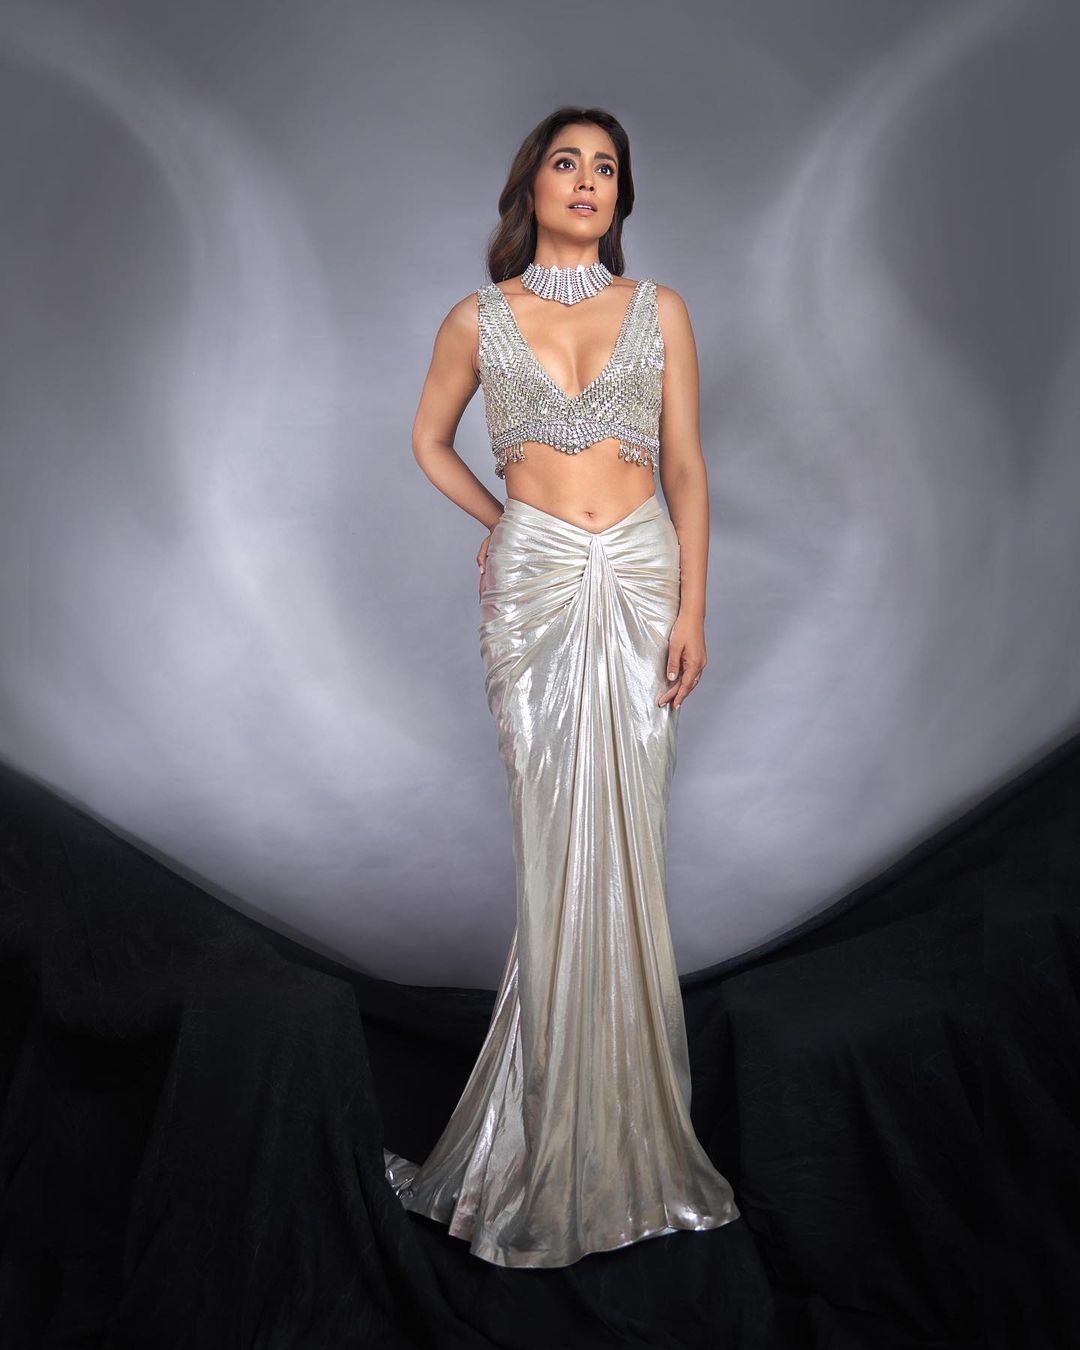 shriya-saran-hot-looks-in-amazing-silver-colour-lehenga